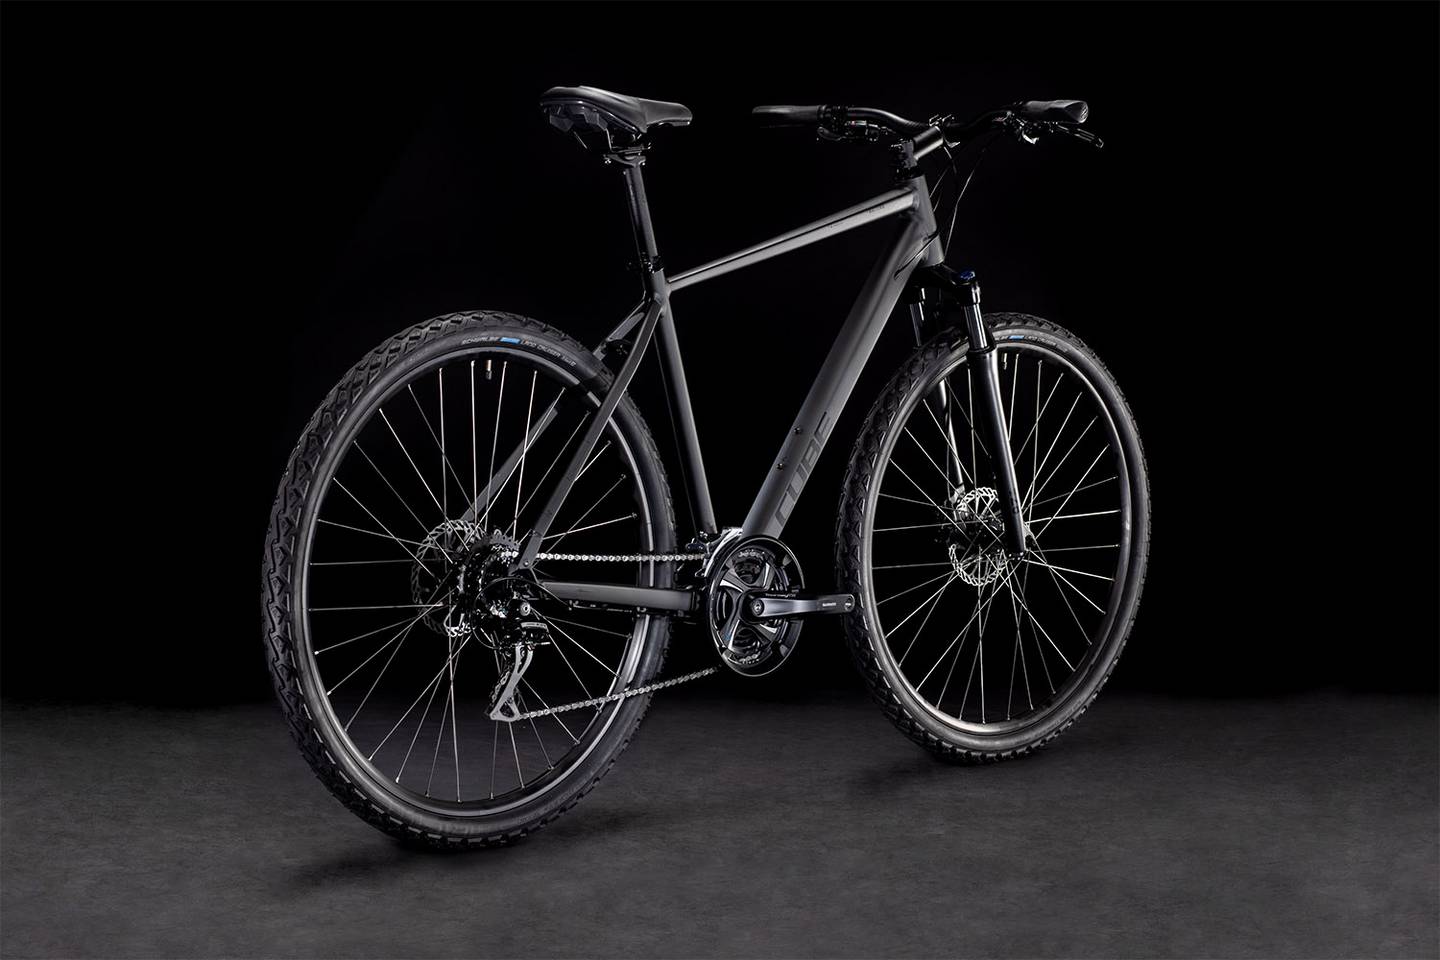 Bicicleta de ciudad CUBE Nature Graphite'n'Black 2022 / Talla 50 cm